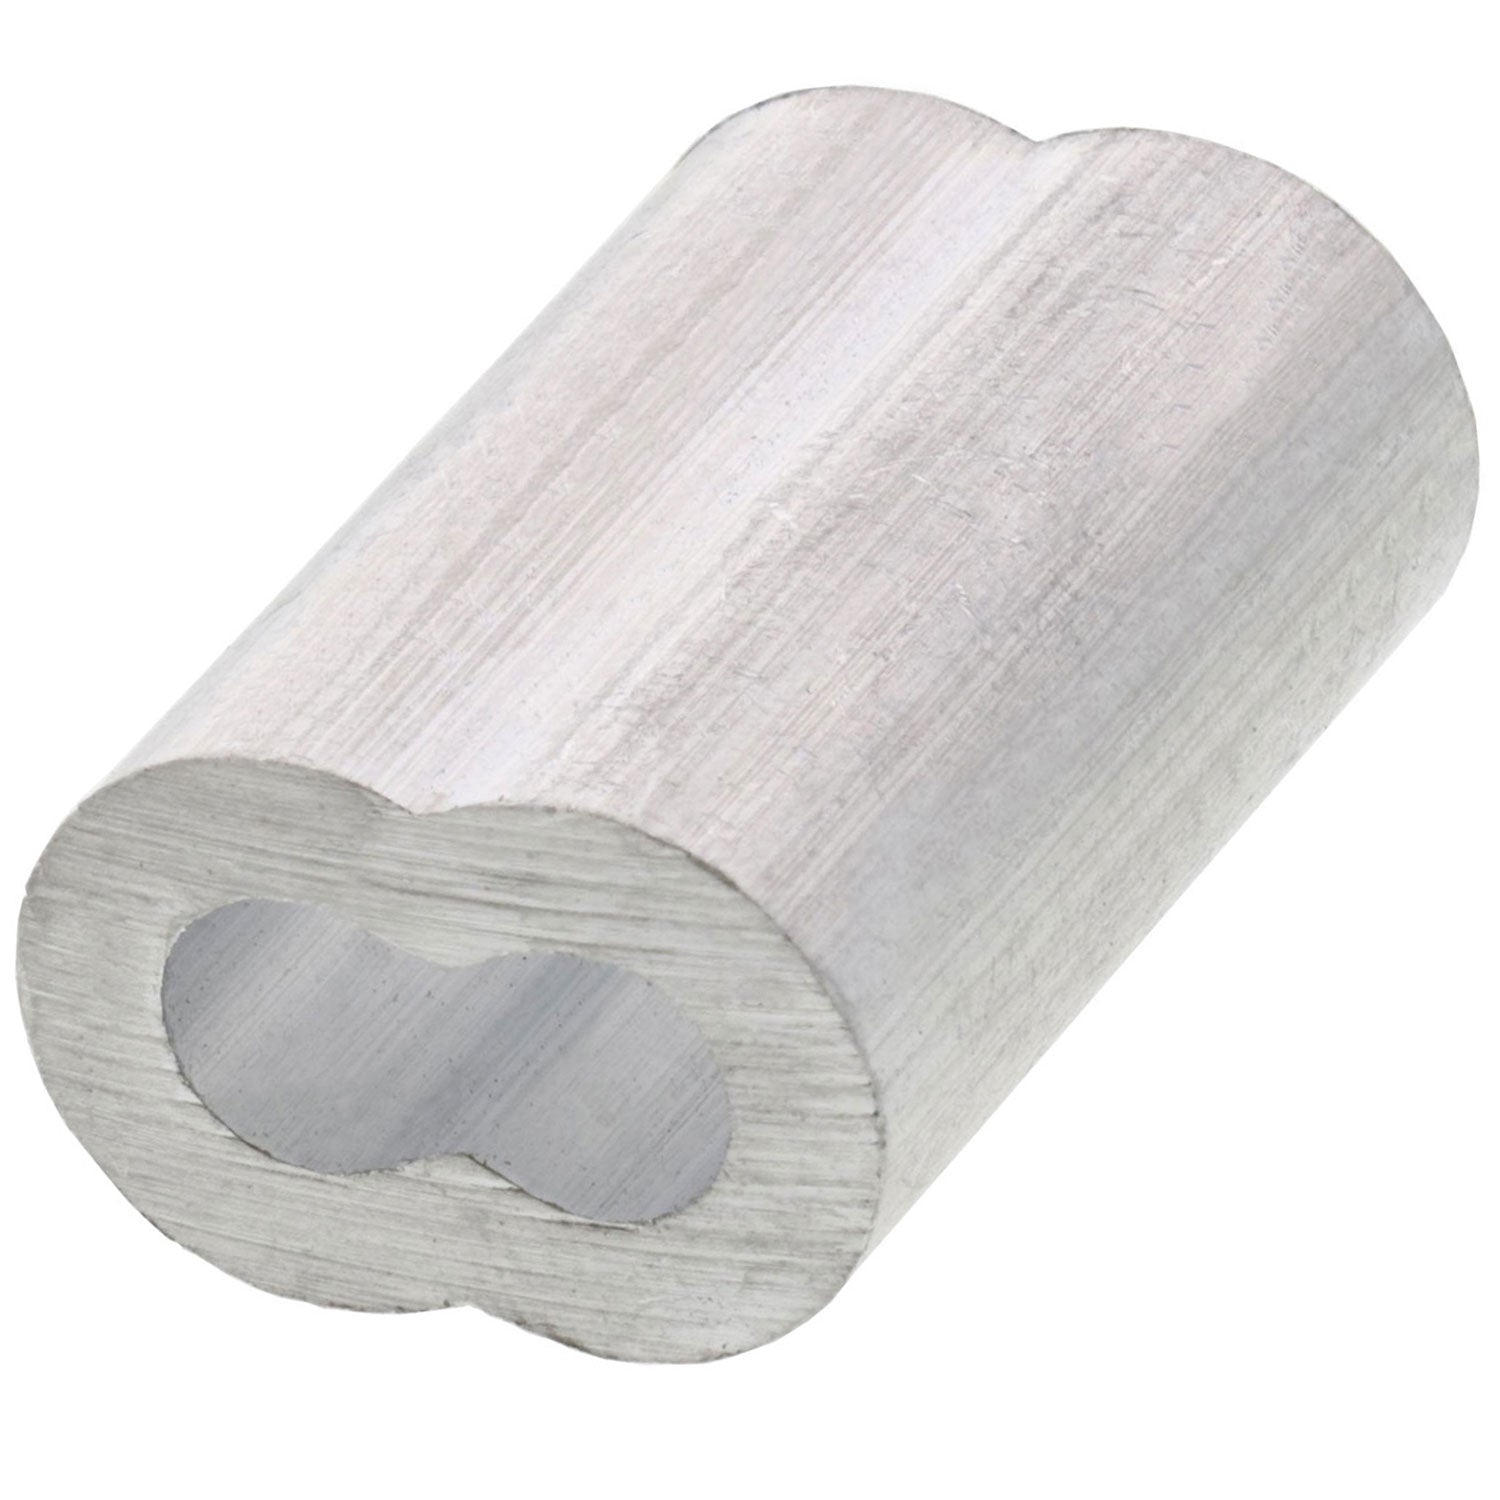 Single barrel aluminum crimping sleeves - Sleeves